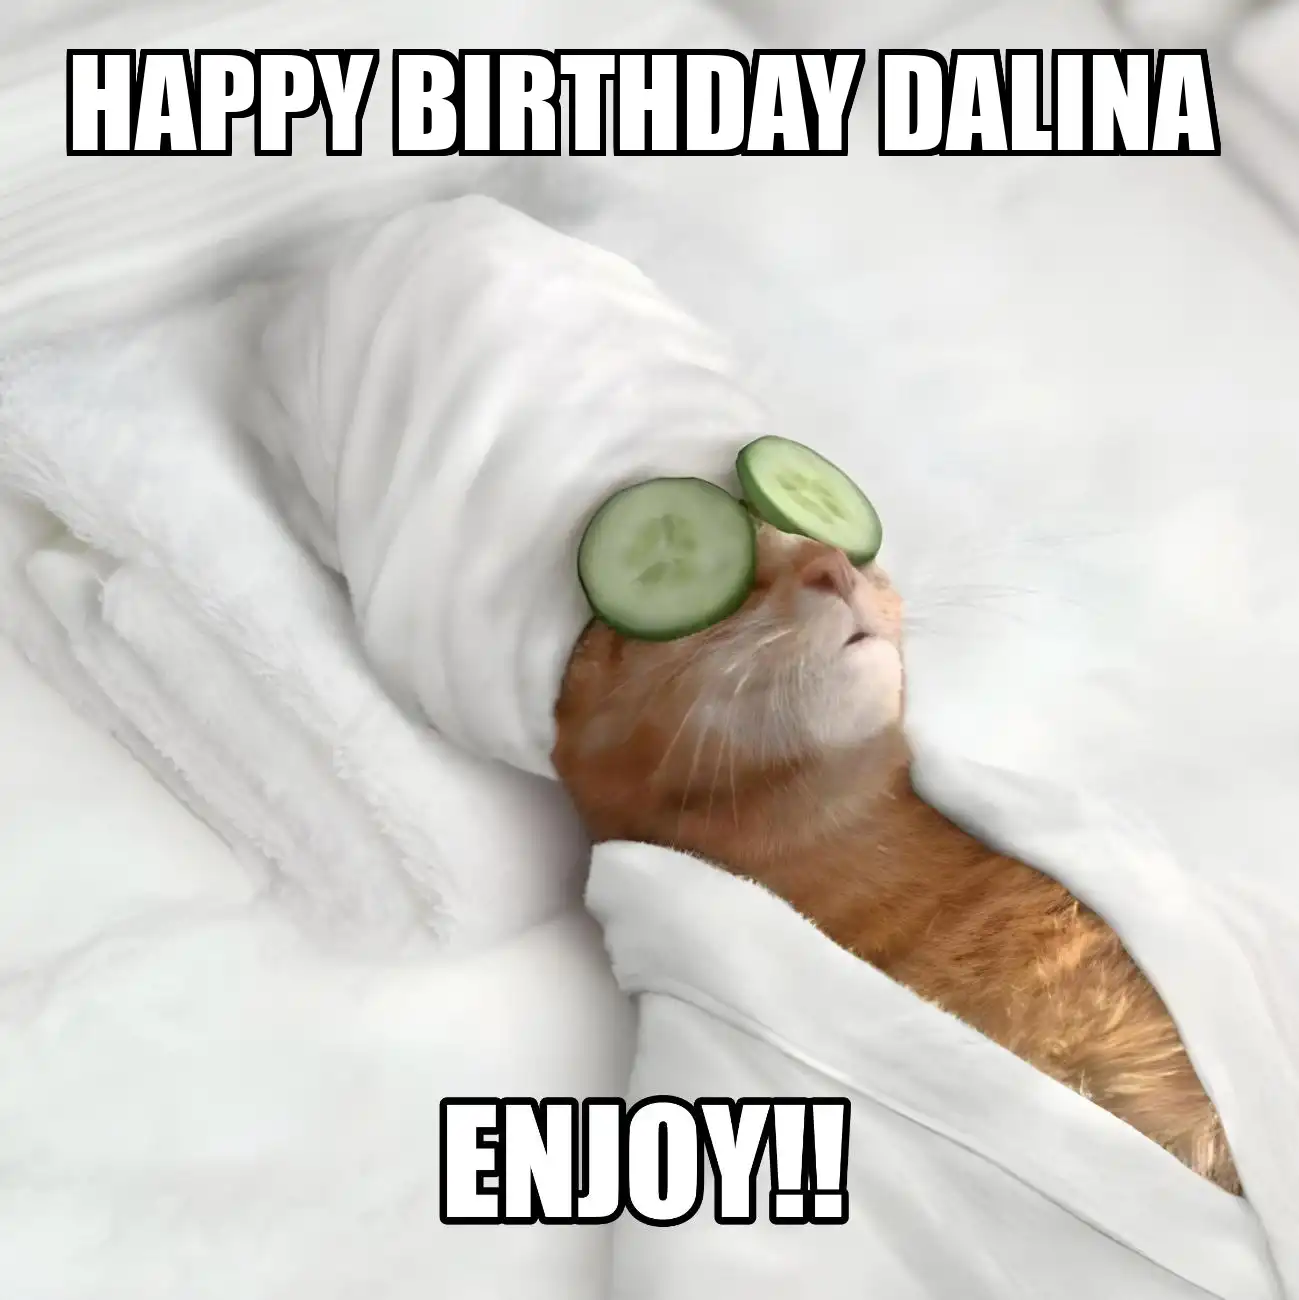 Happy Birthday Dalina Enjoy Cat Meme